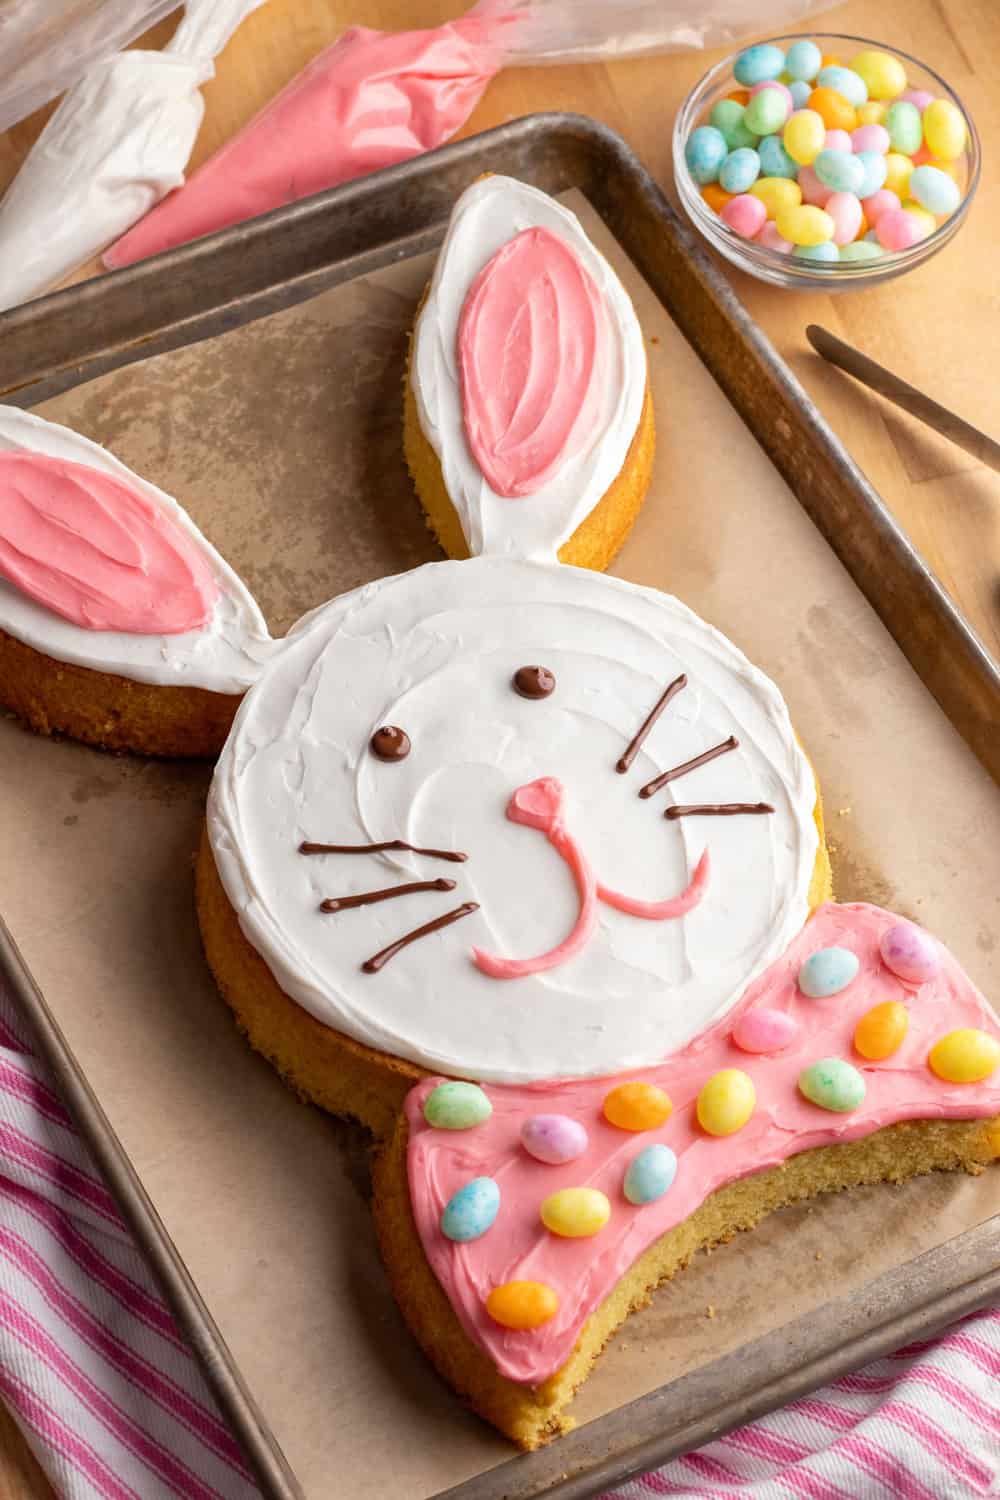 How To Make An Easy Bunny Cake Recipe